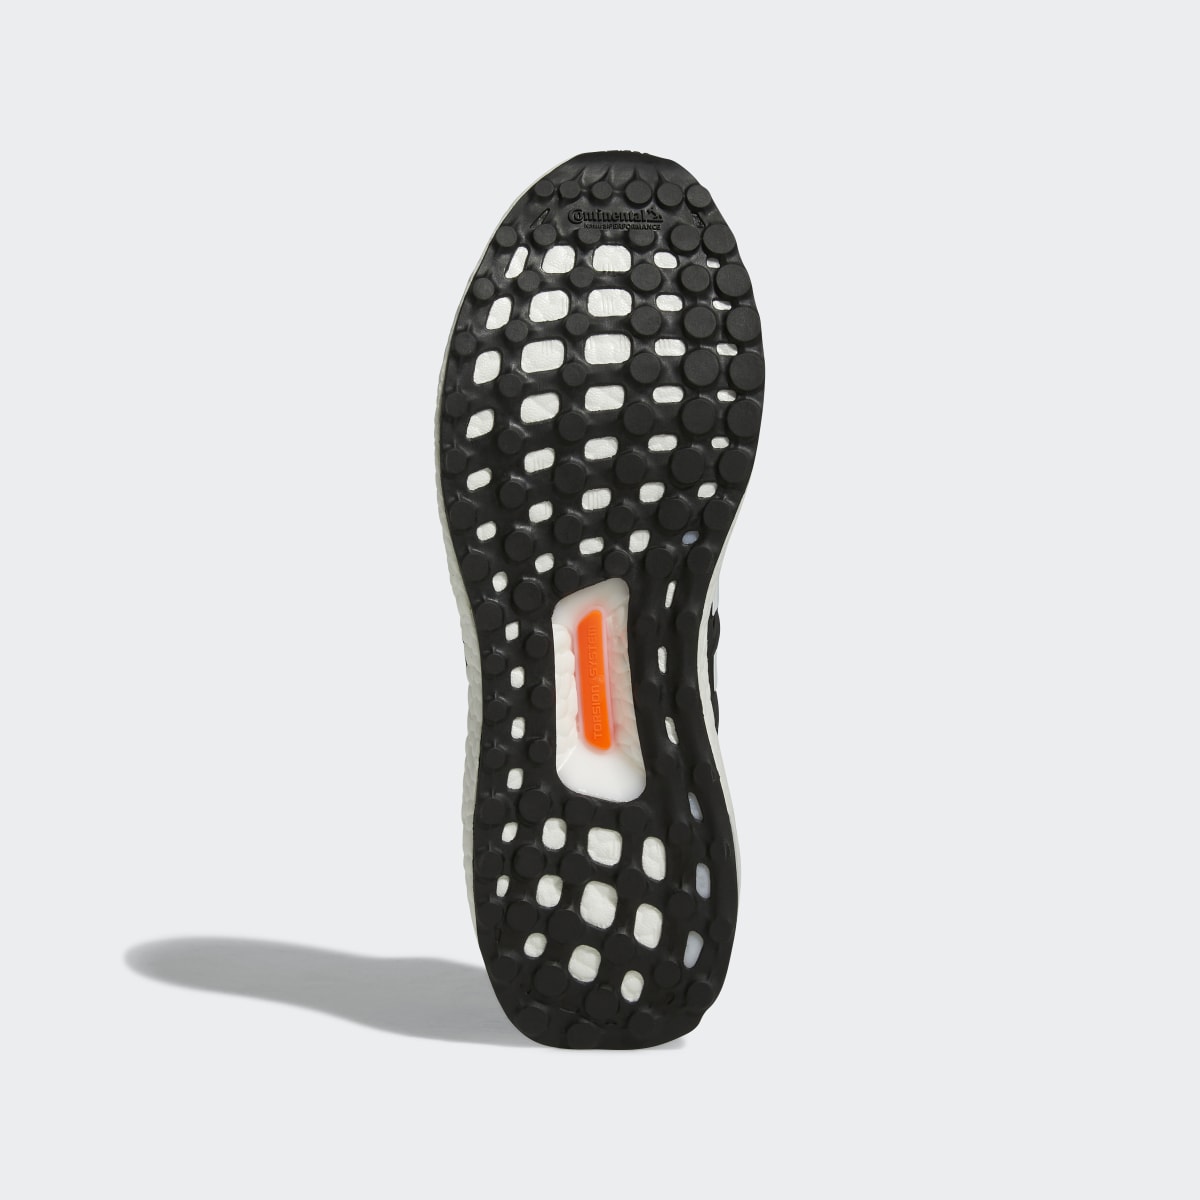 Adidas Ultraboost 5 DNA Running Sportswear Lifestyle Shoes. 4